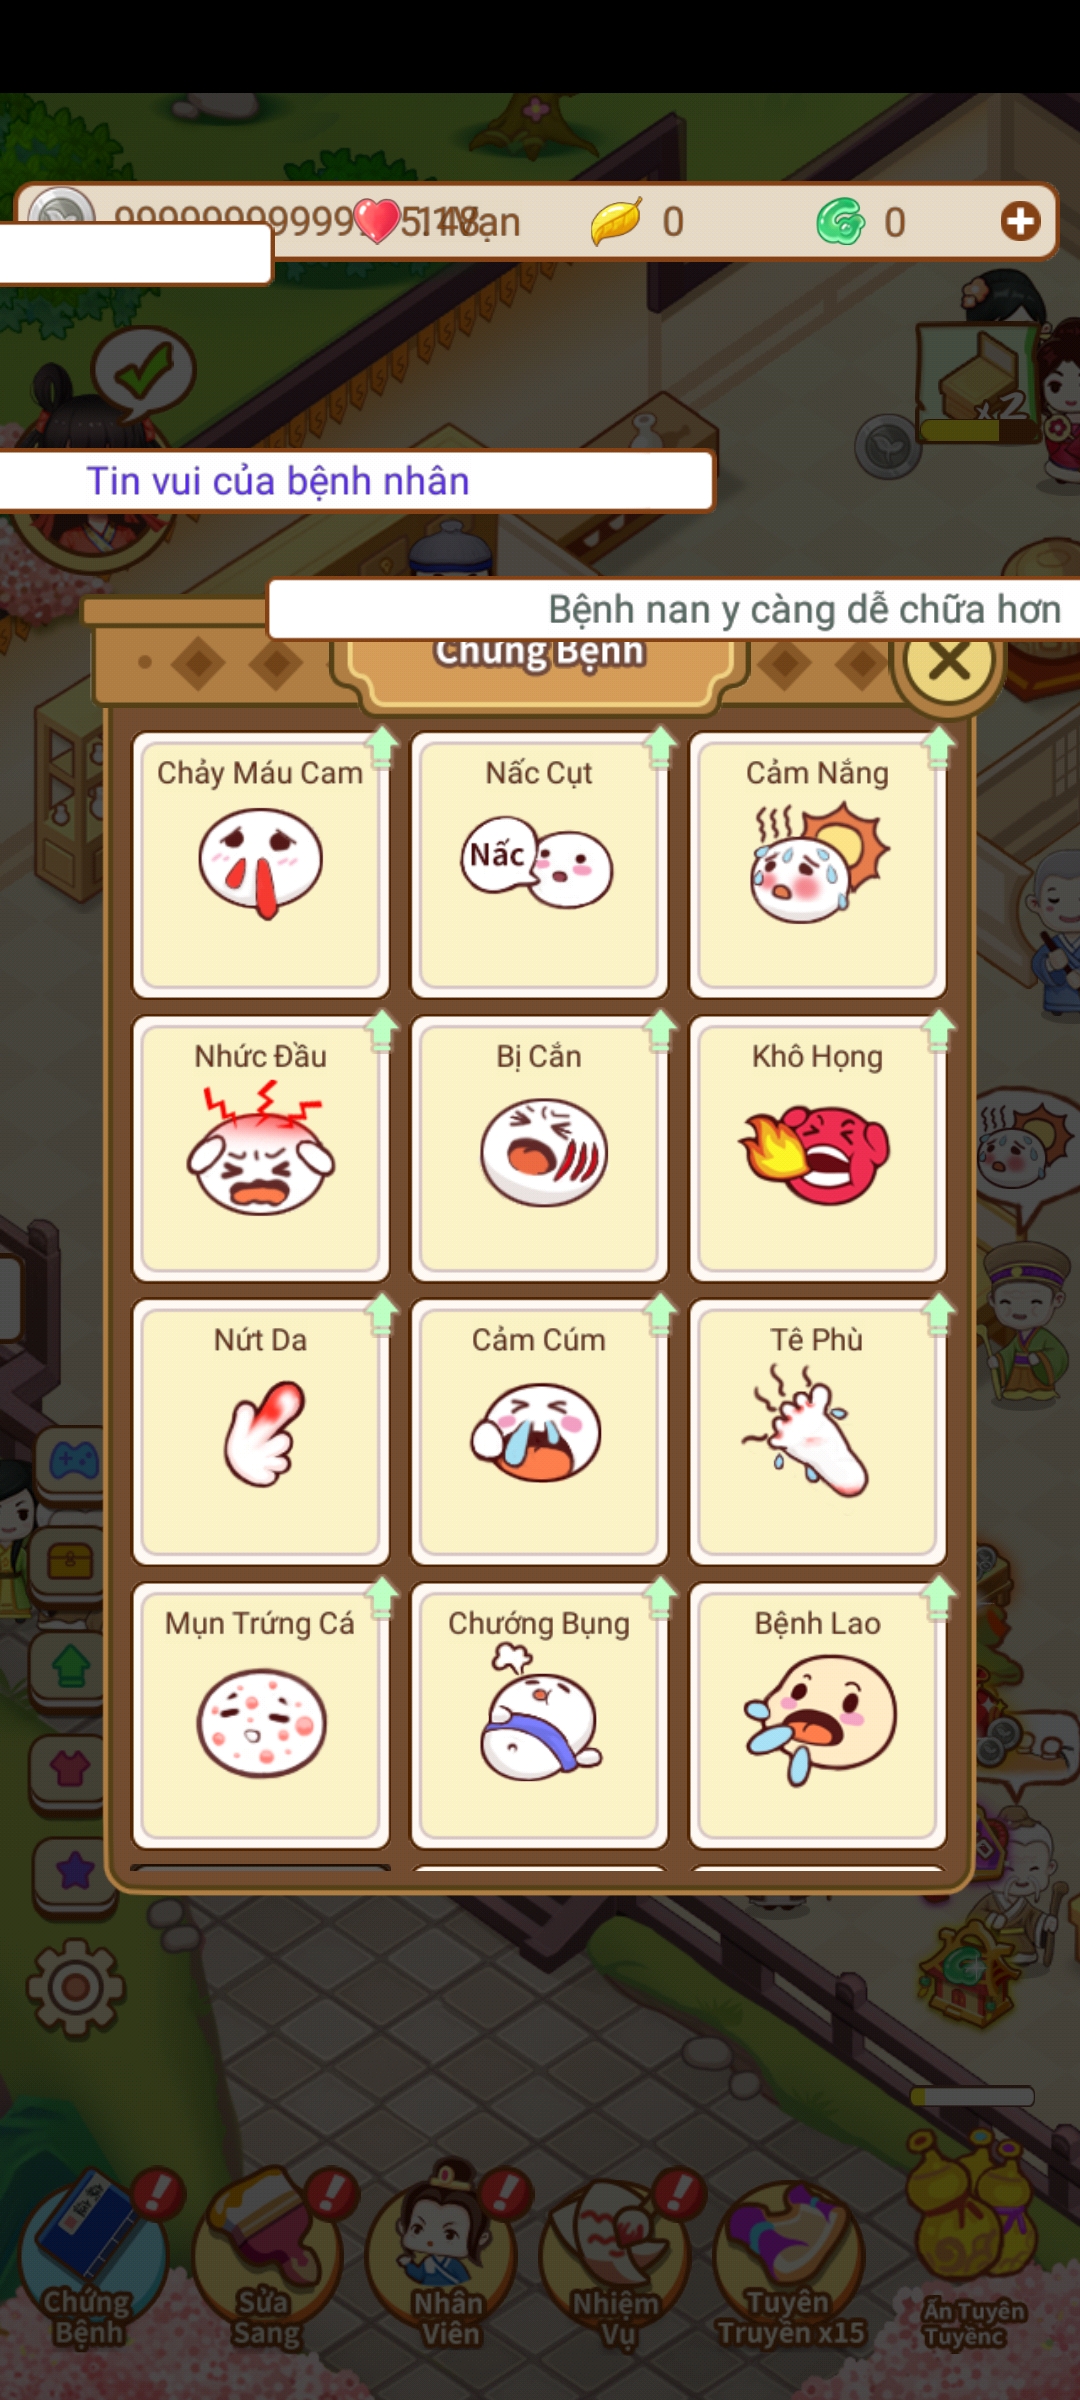 [Game Android] Kungfu Hospita‪l - Giang Hồ Y Quán Tiếng Việt